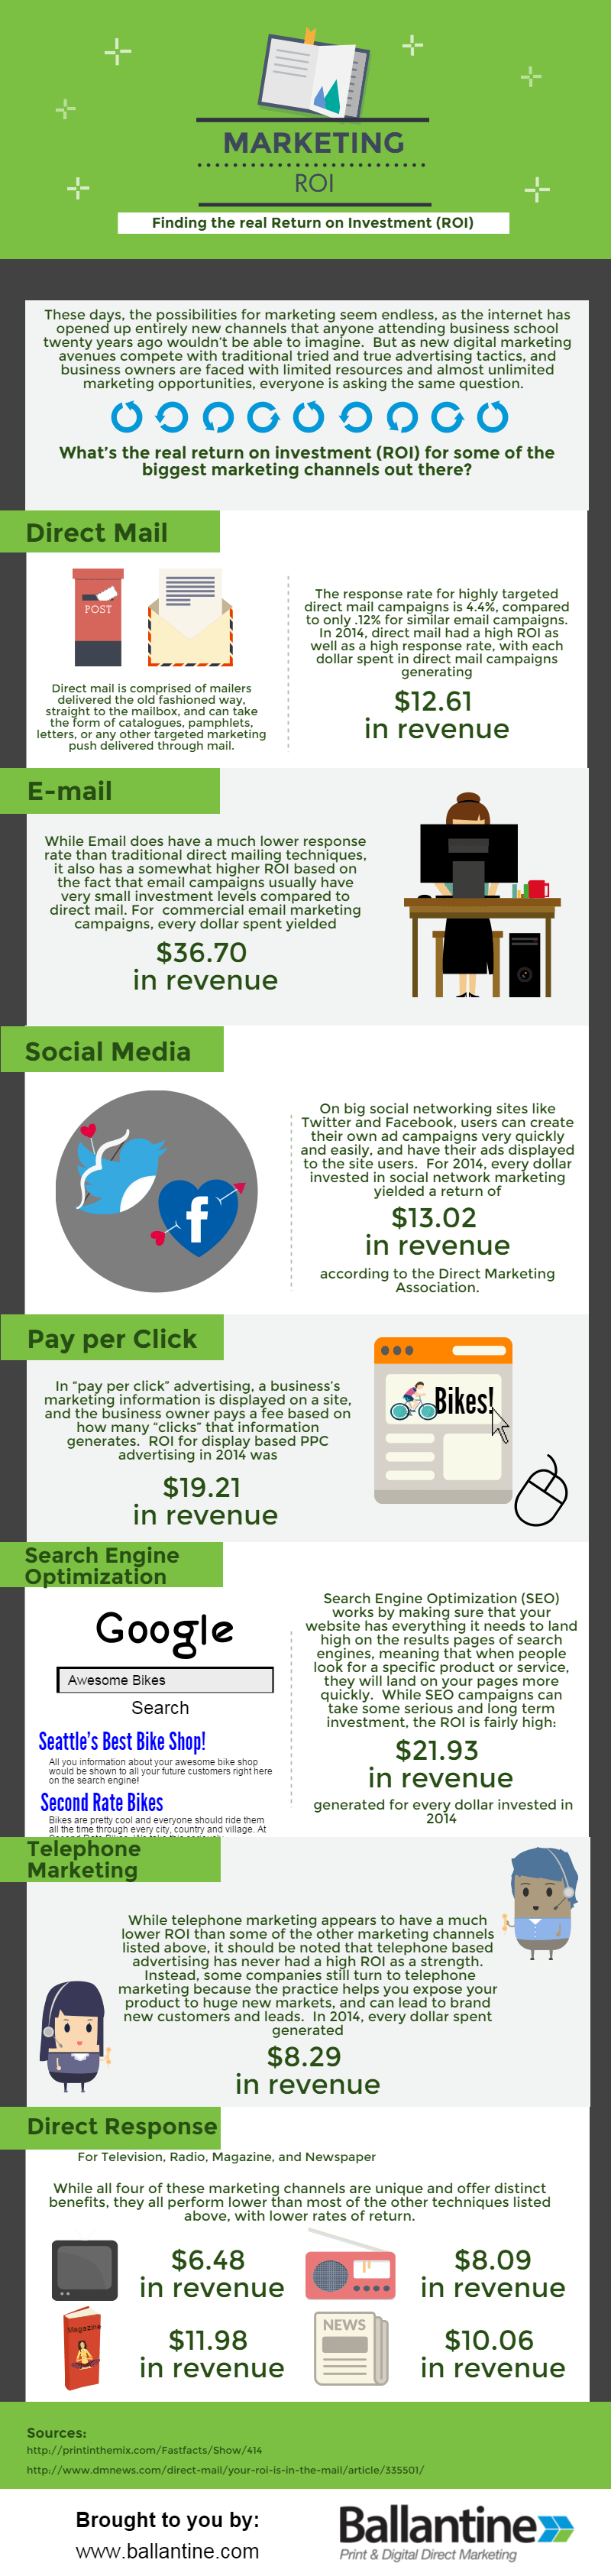 Marketing ROI Infographic